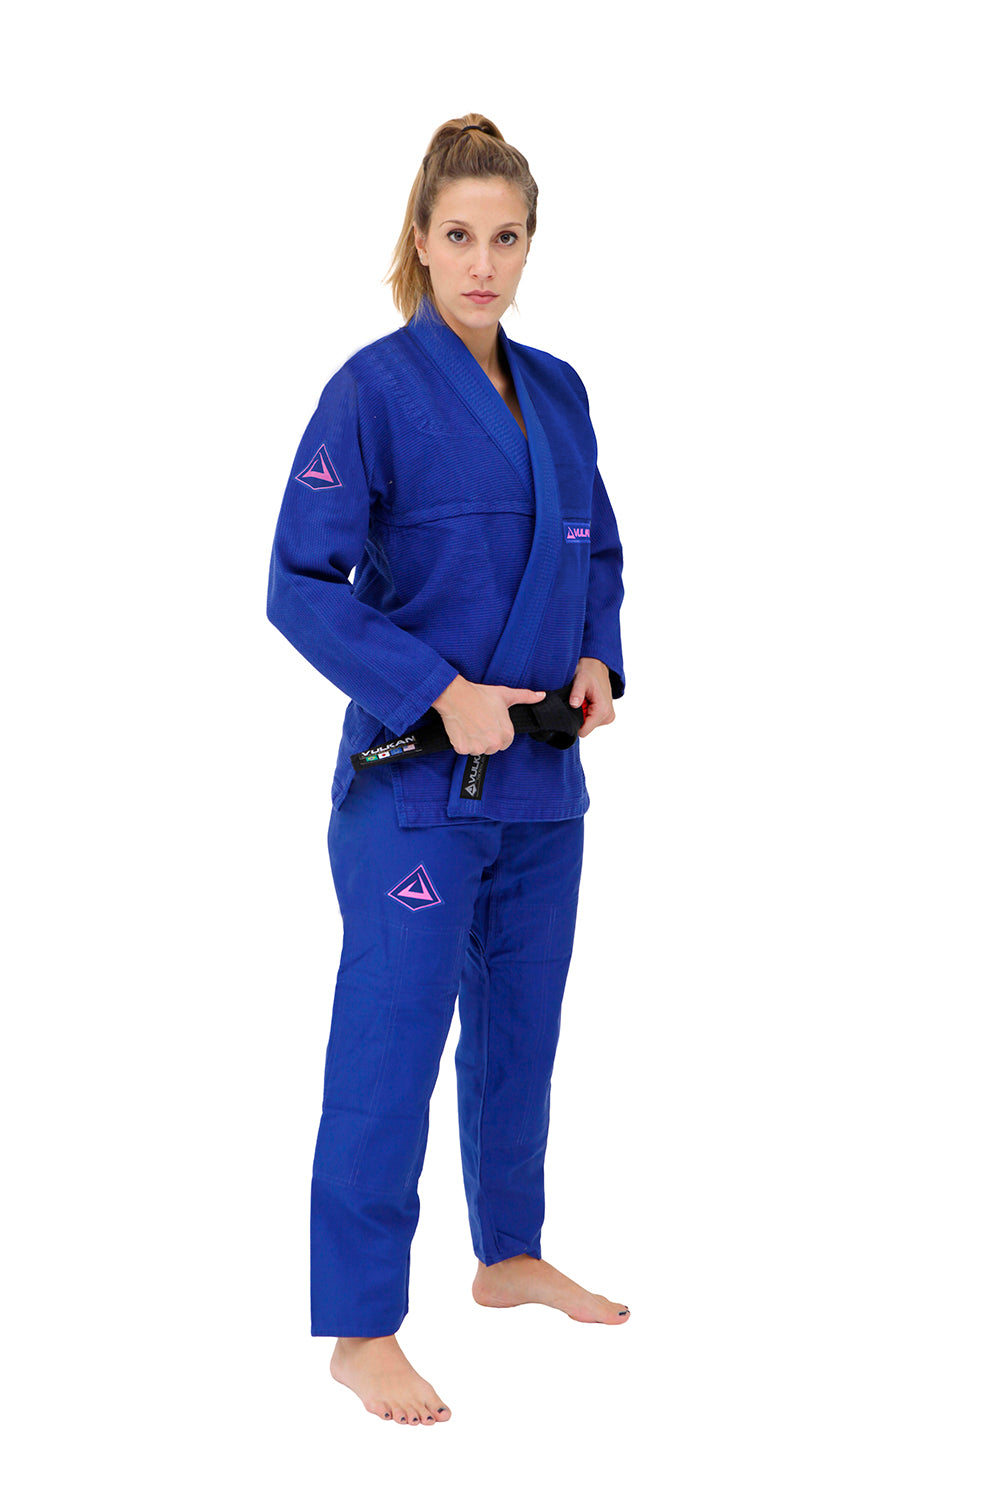 WOMEN PRO EVOLUTION Jiu Jitsu GI (Royal Blue)